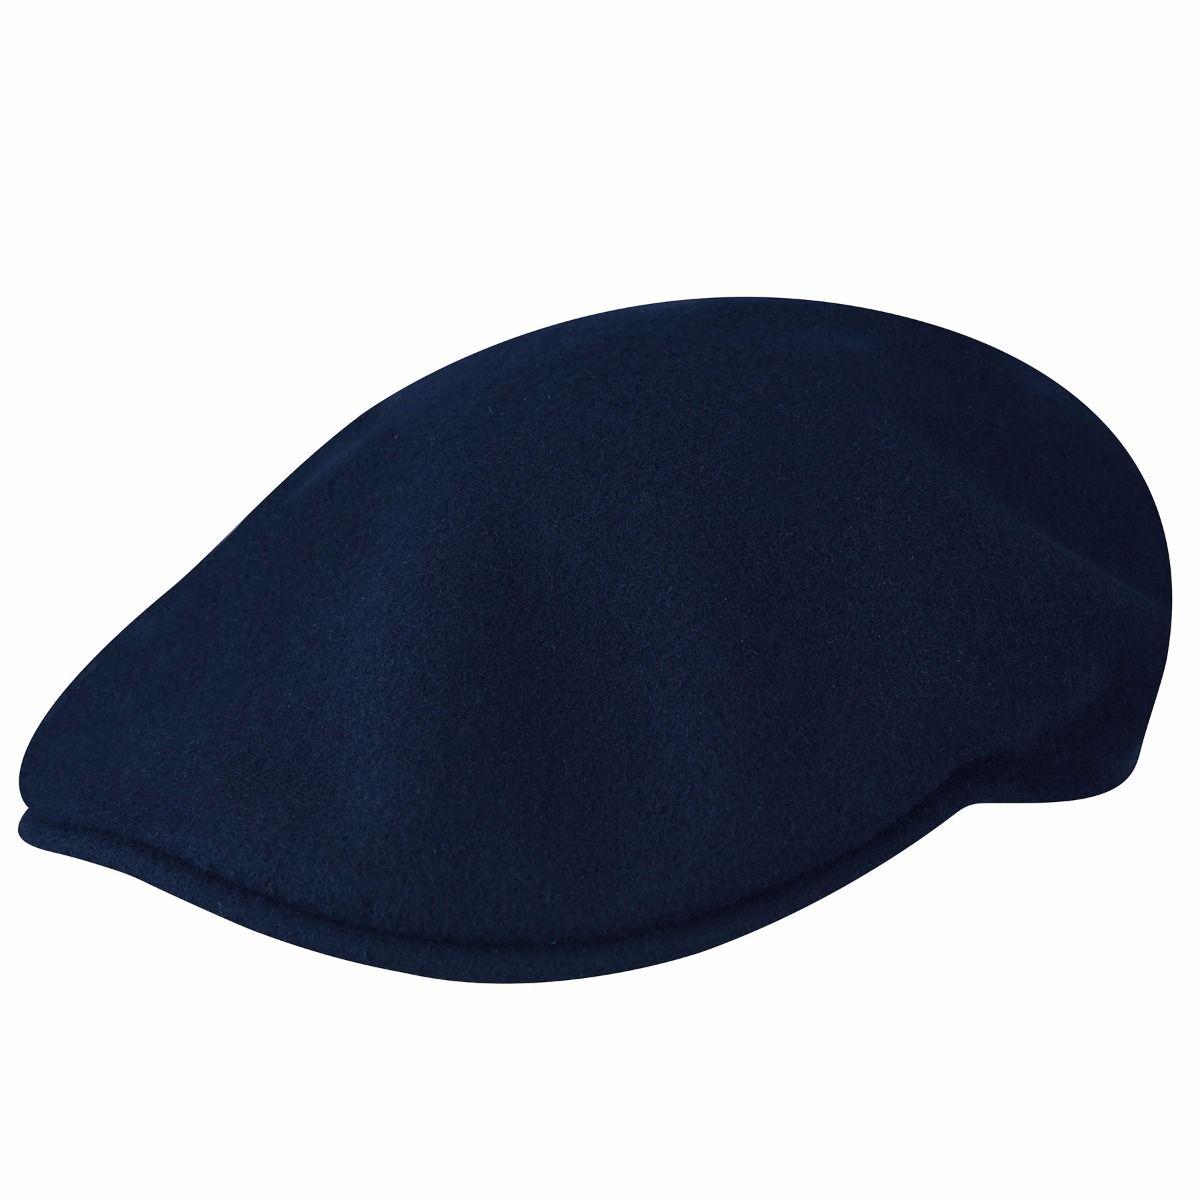 Kangol Navy Blue Wool 504 Ivy Cap | Upscale Menswear